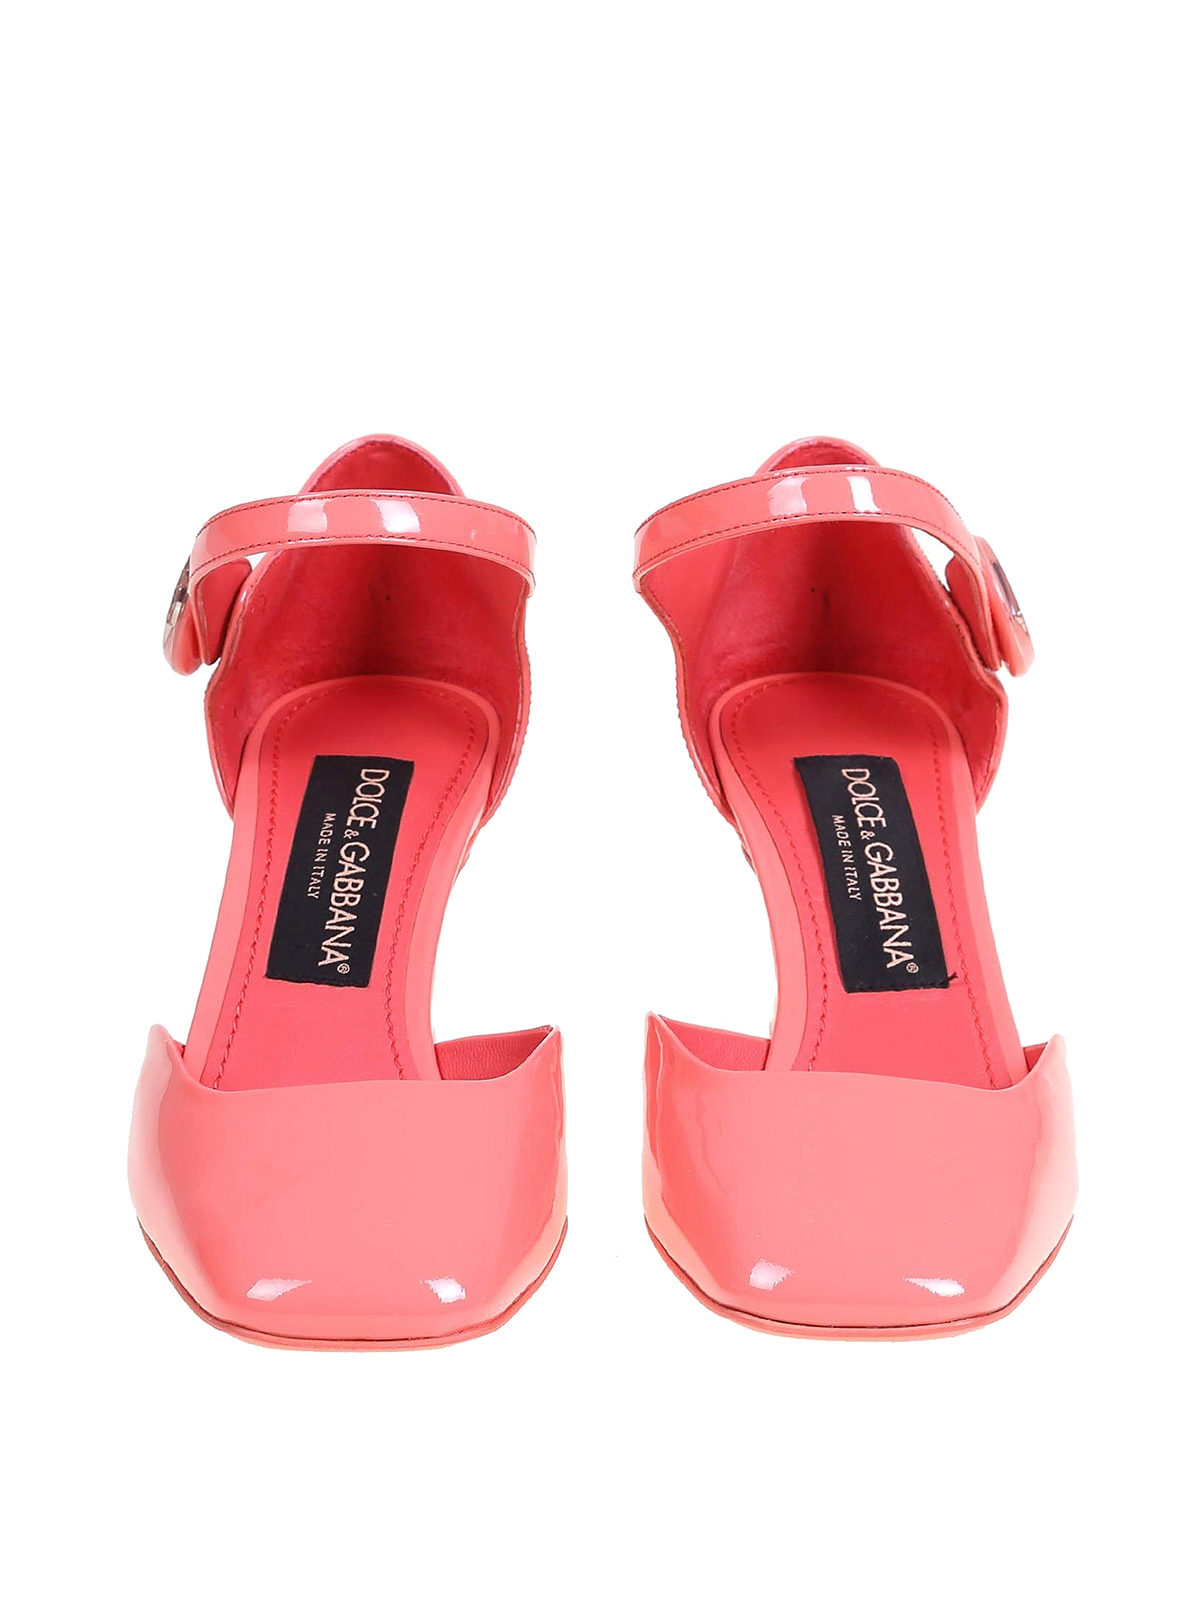 Escarpins Cuir Dolce & Gabbana en coloris Rose Femme Chaussures à talons Chaussures à talons Dolce & Gabbana 